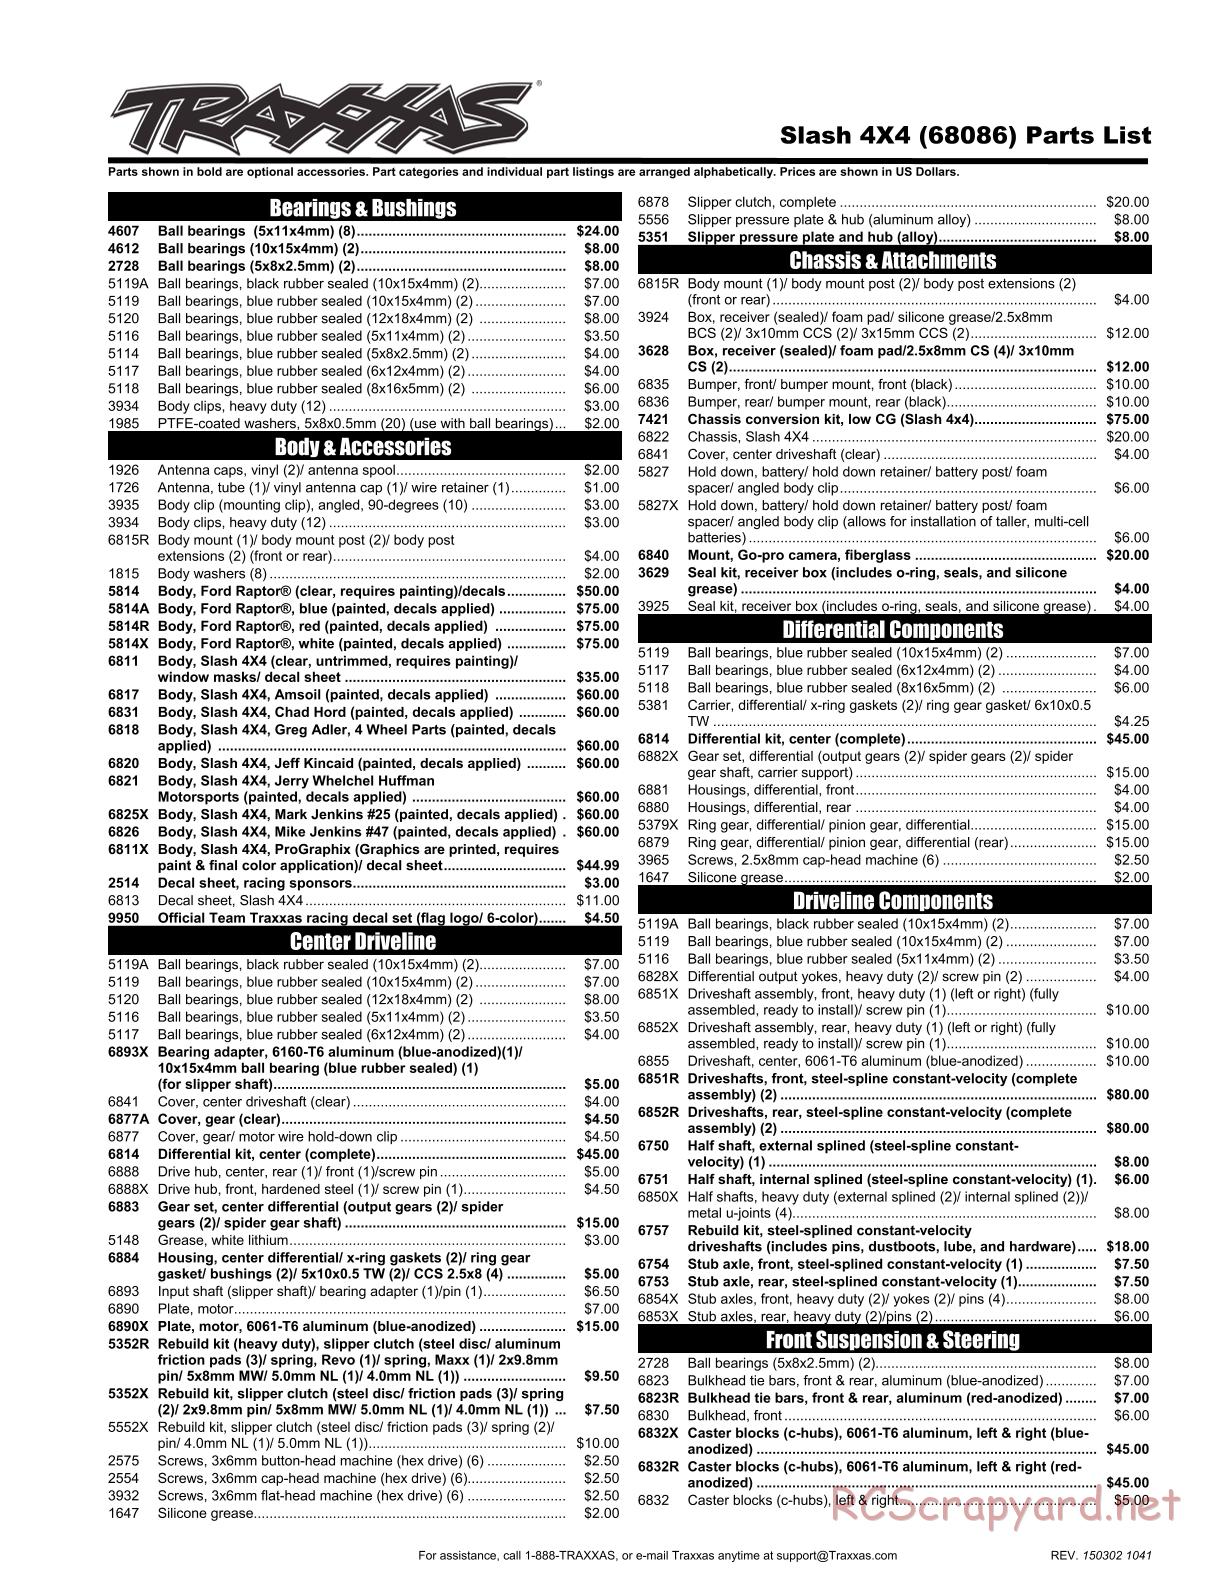 Traxxas - Slash 4x4 (2014) - Parts List - Page 1